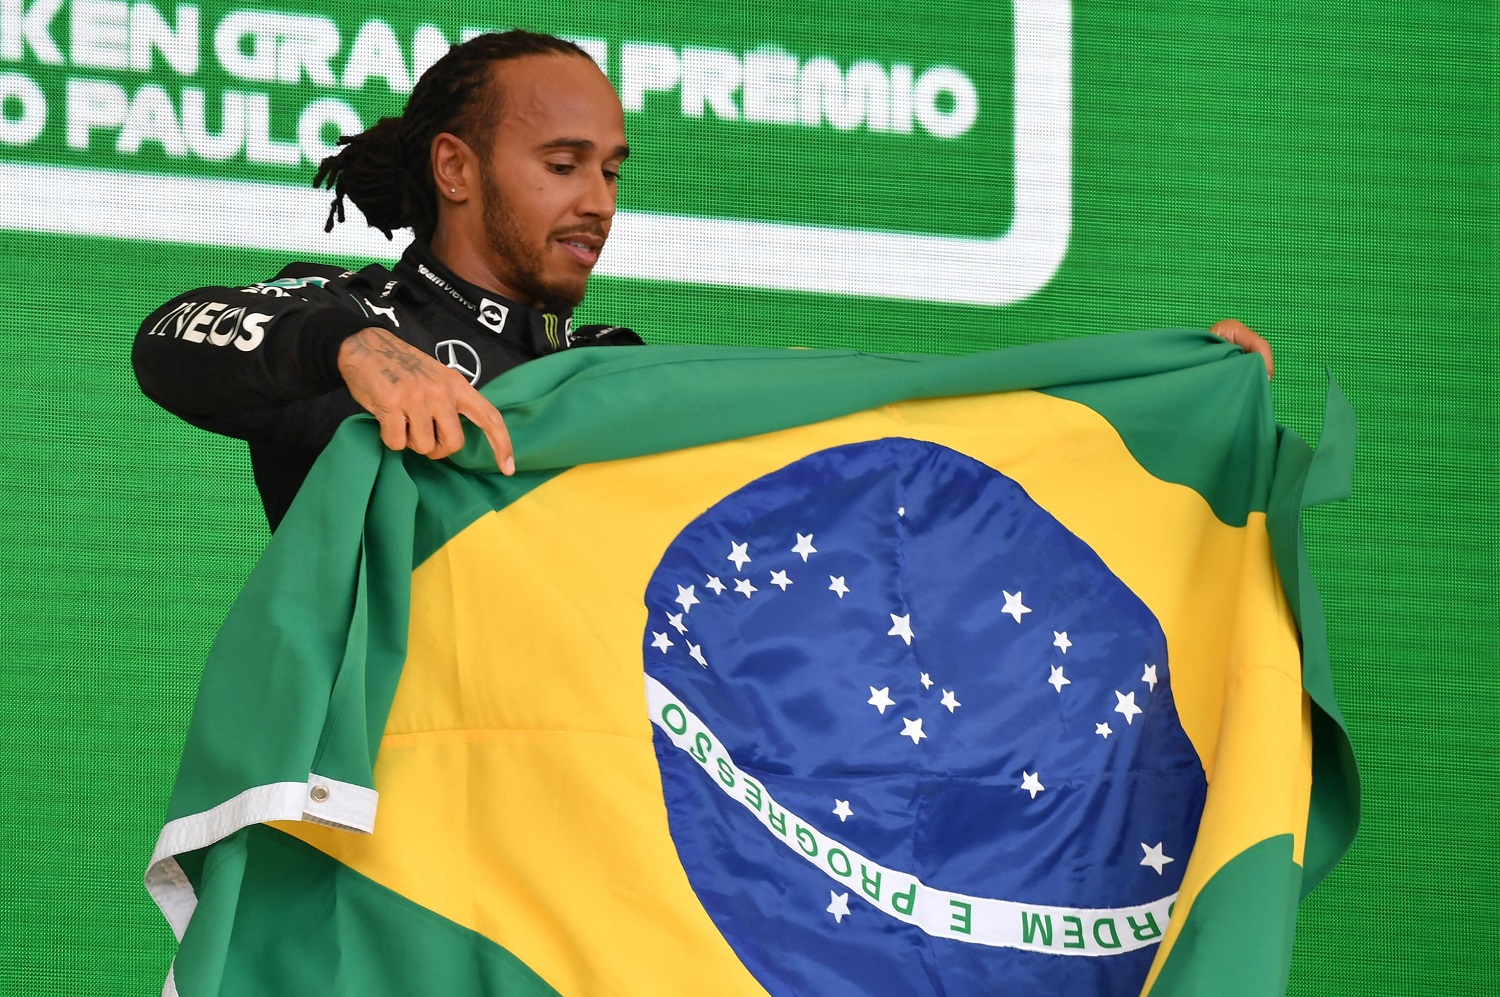 Mercedes' British driver Lewis Hamilton displays a Brazilian flag as he celebrates on the podium after winning Brazil's Formula One Sao Paulo Grand Prix at the Autodromo Jose Carlos Pace on Nov. 14, 2021.